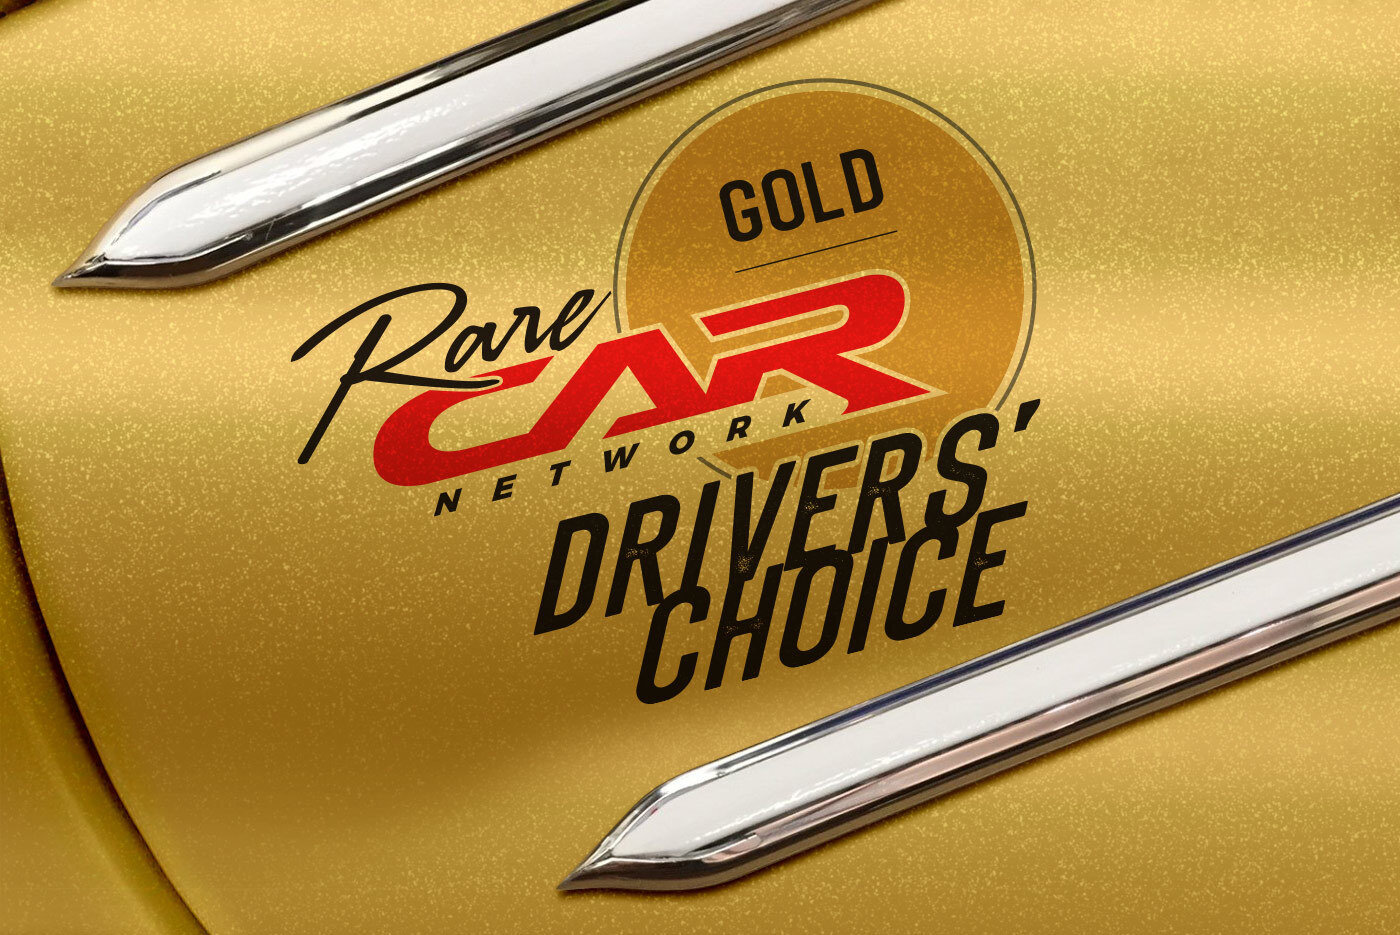 						Rcn Drivers Choice
			